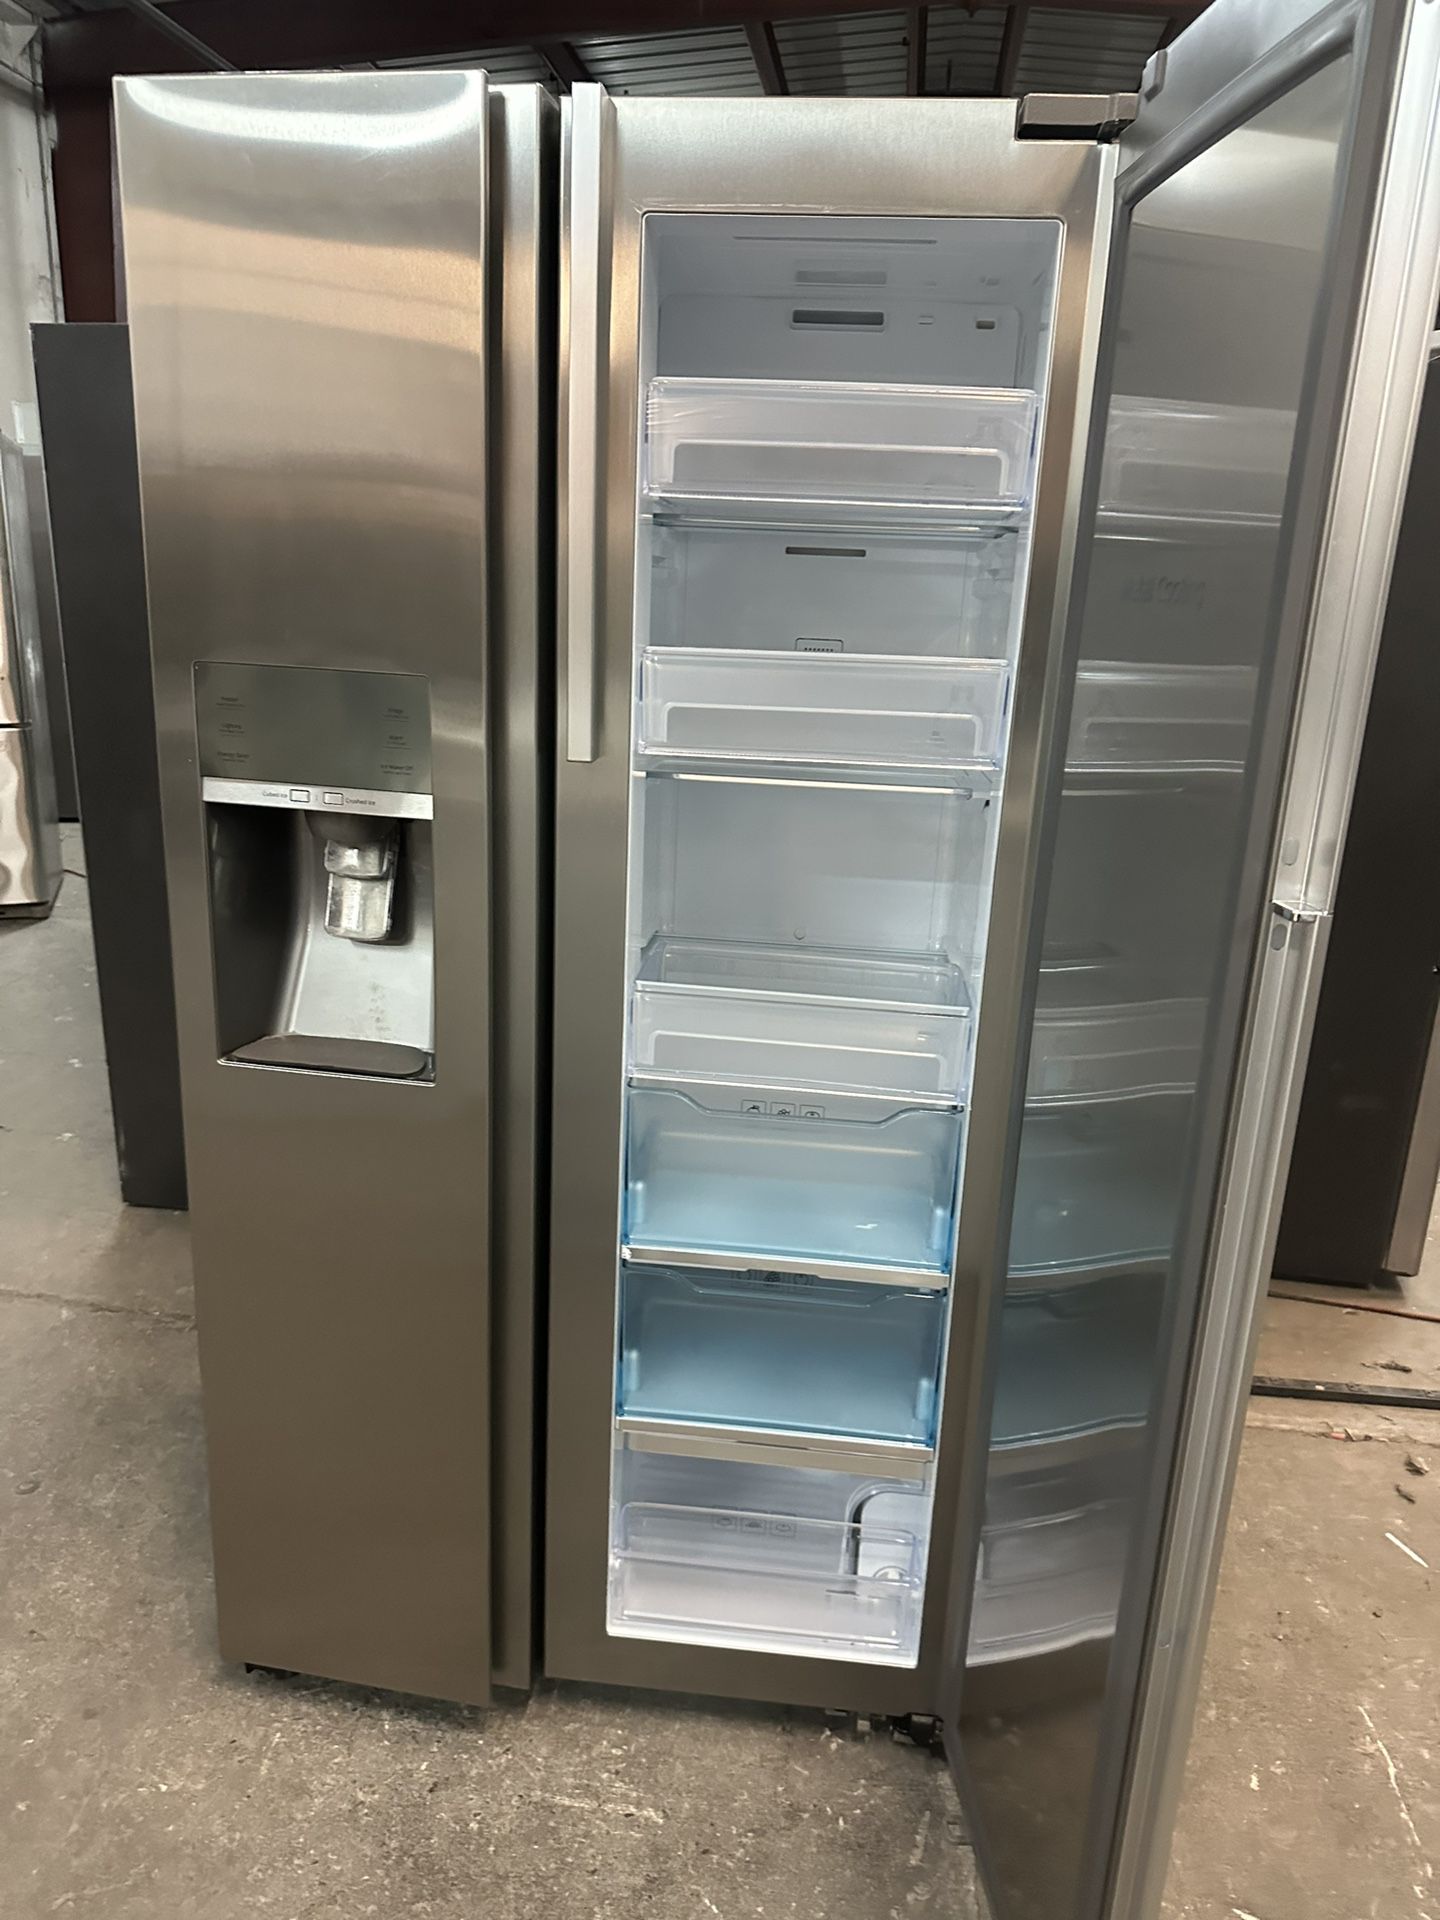 Door In Door Samsung side-by-side water ice counter depth can deliver  Very nice refrigerator retail price around $3000